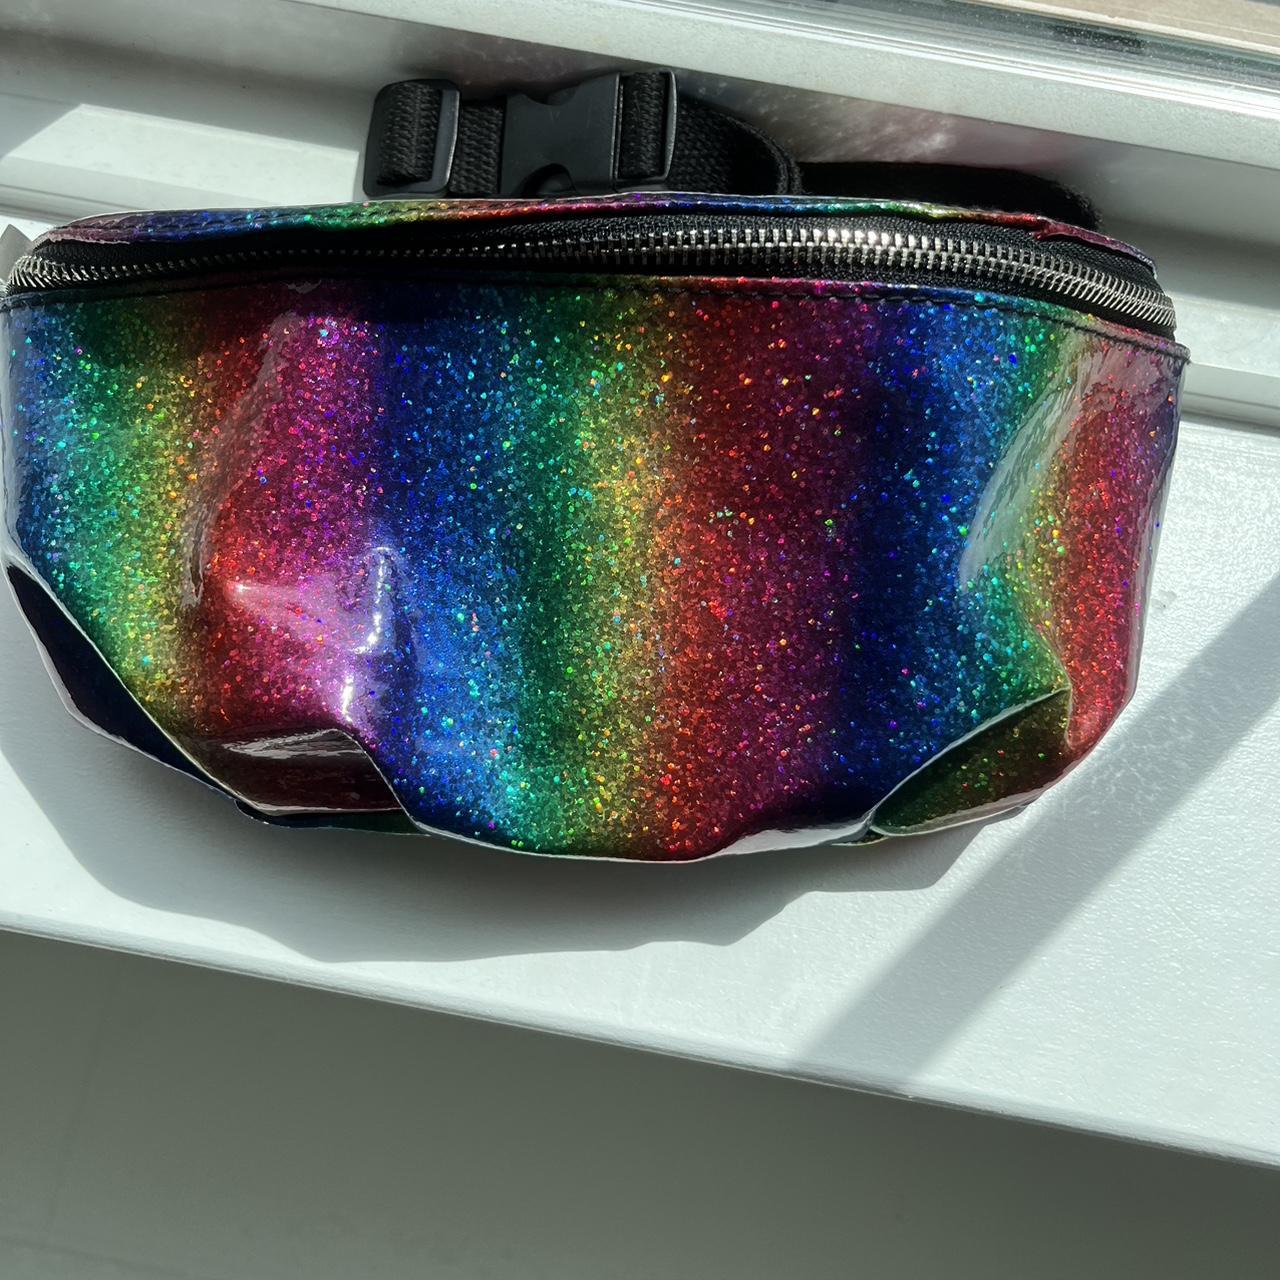 Rainbow Glitter Pack (Medium)